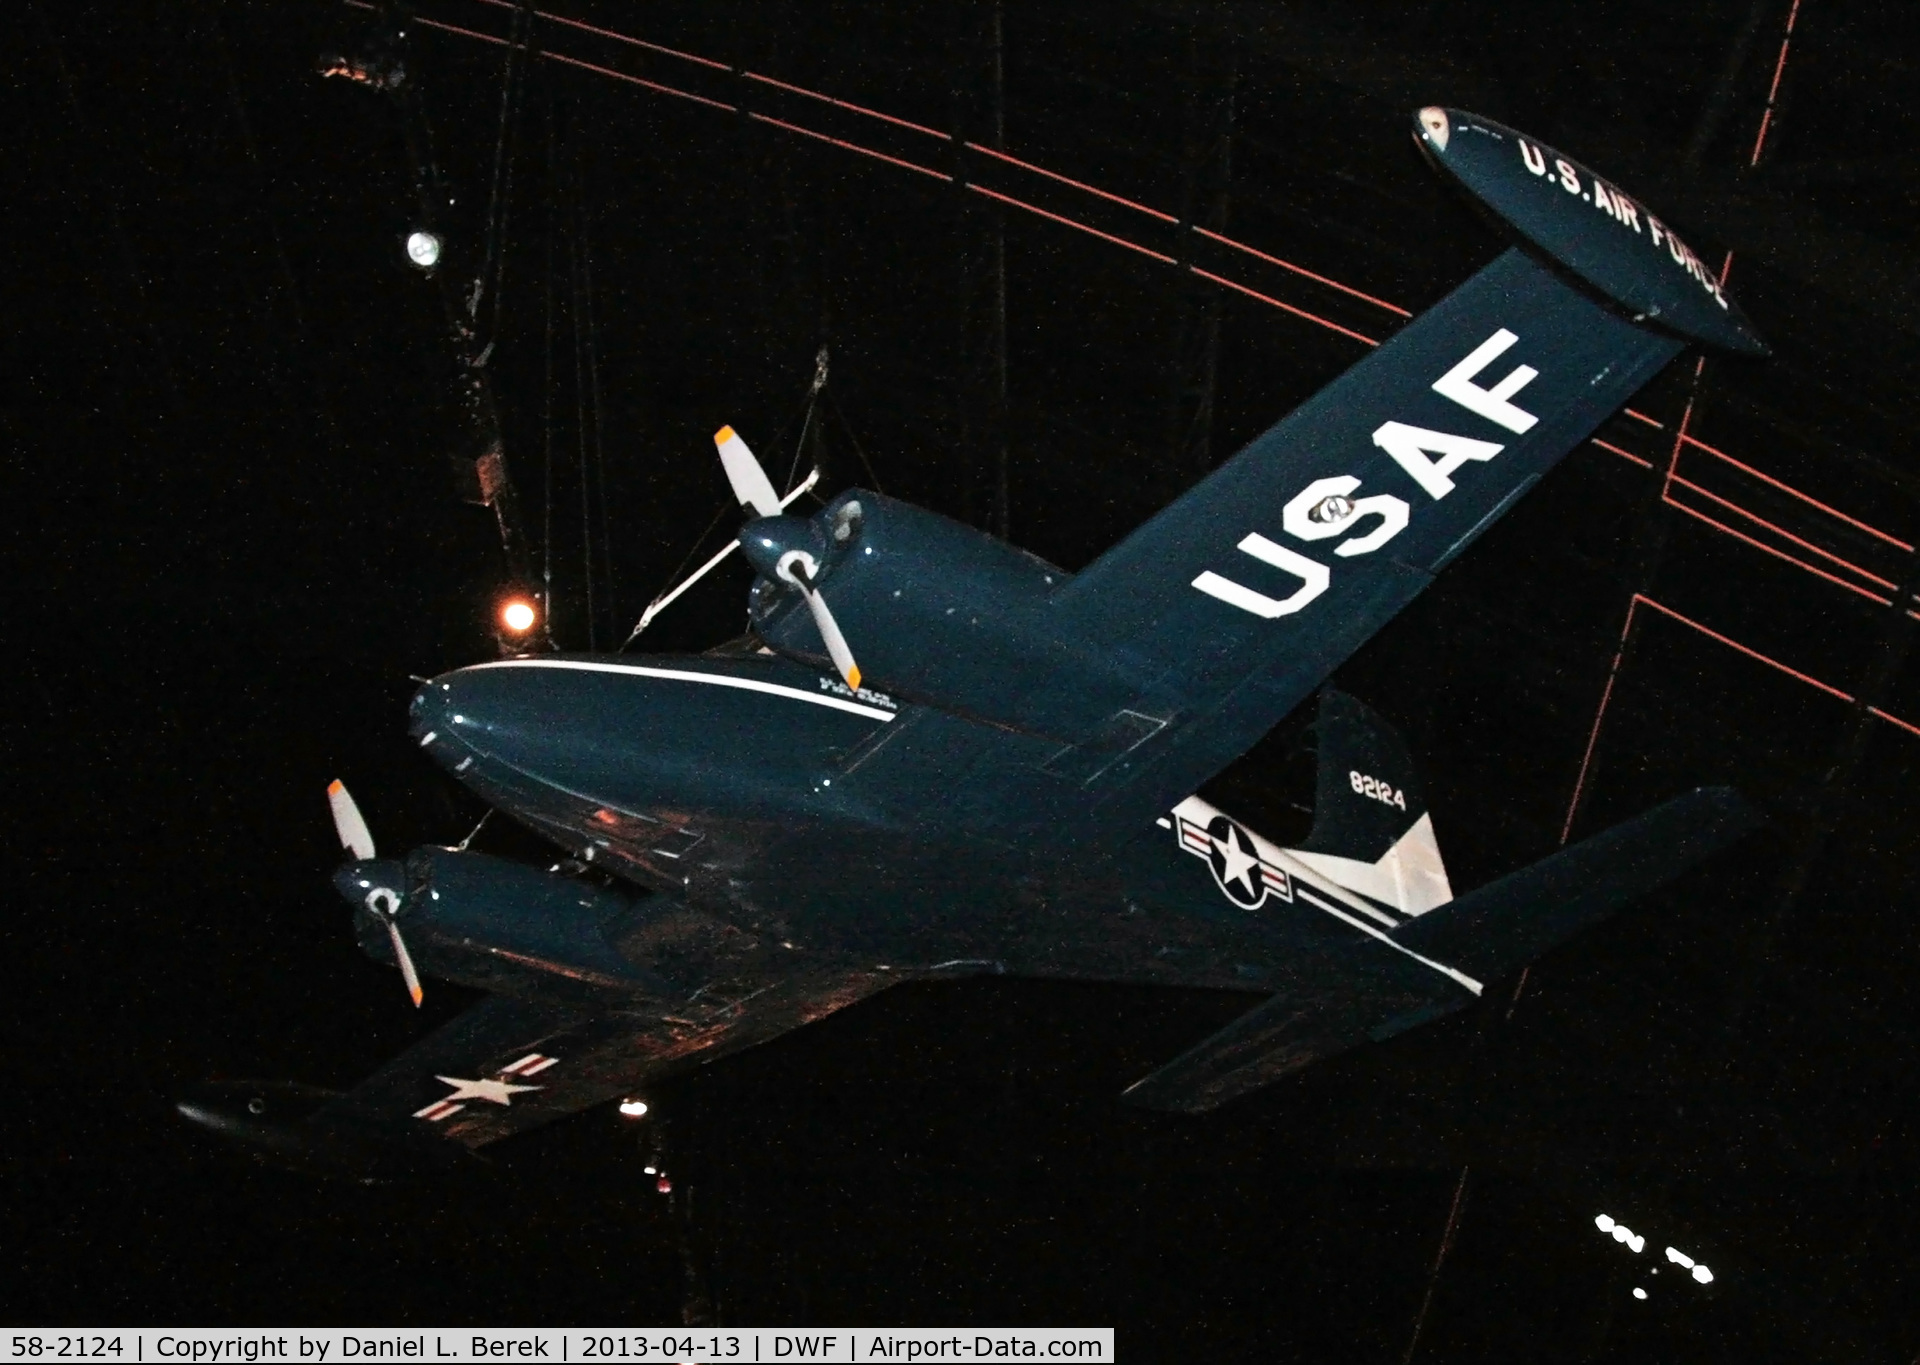 58-2124, 1958 Cessna U-3A Blue Canoe (310A) C/N 38098, It's not easy spotting a dark airplane in a dark room!